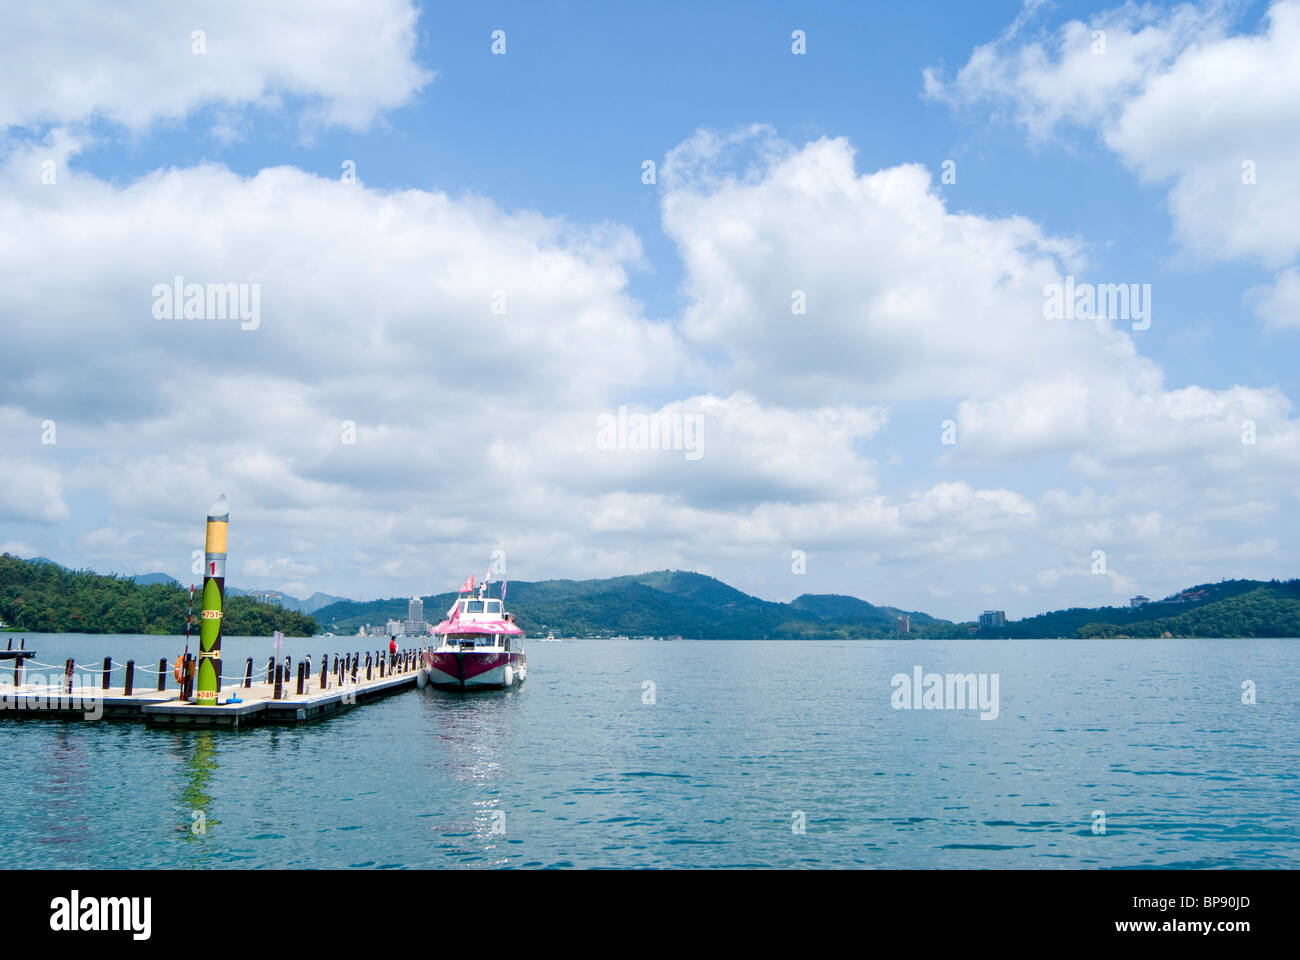 Anker Boote auf dem See, Sonne-Mond-See, Taiwan, Asien. Stockfoto